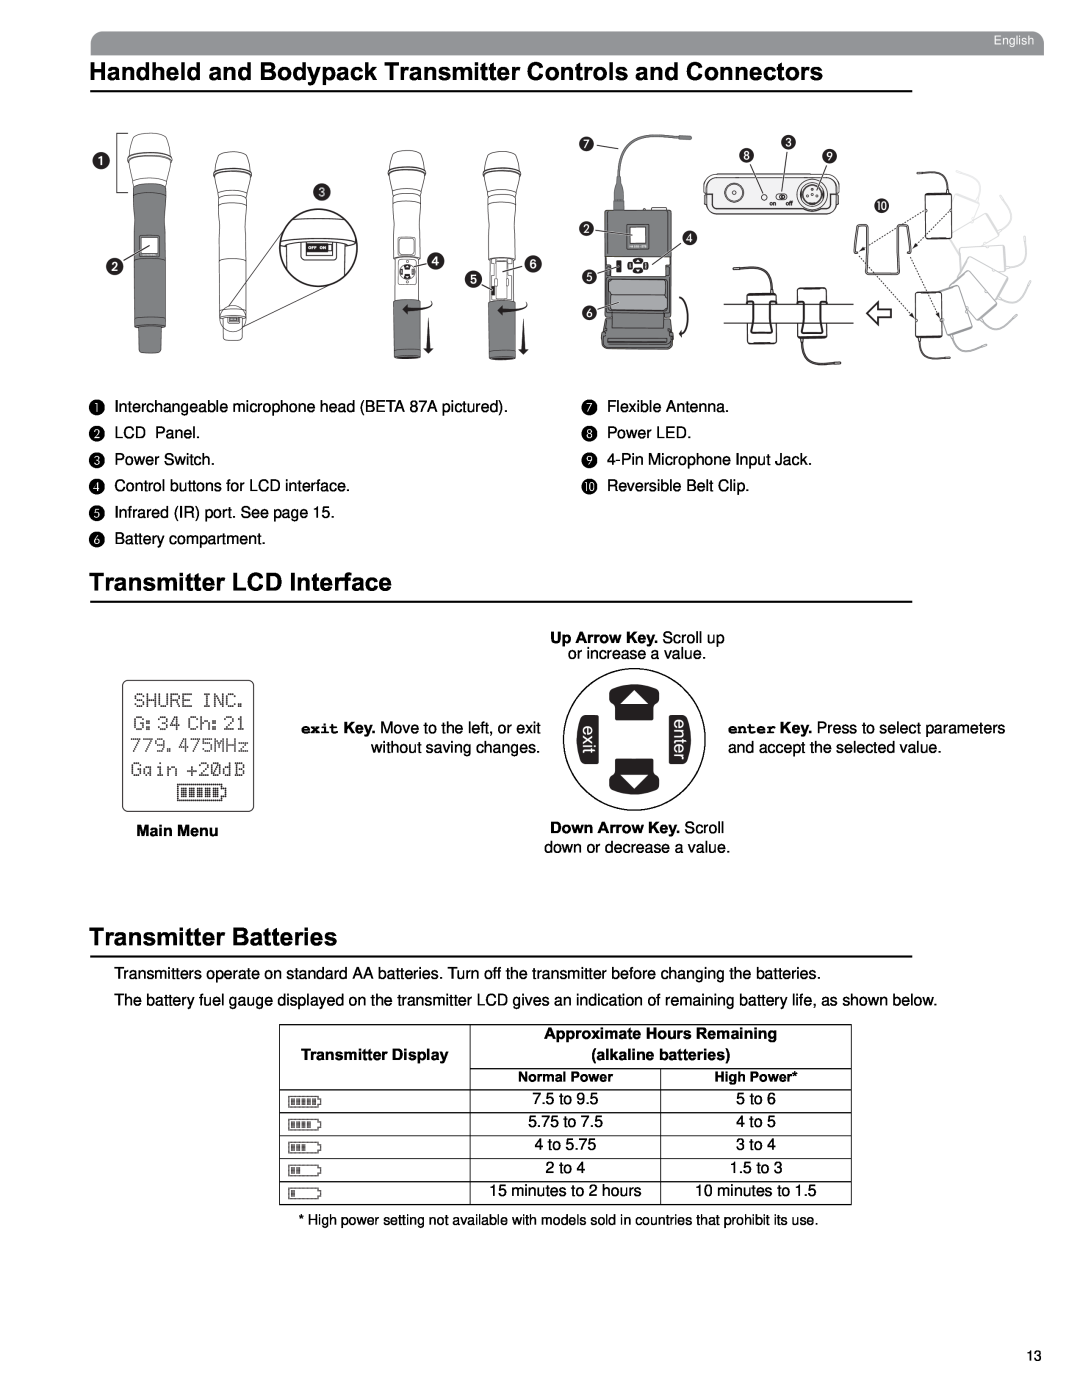 Shure UHF manual Transmitter LCD Interface, Transmitter Batteries, Up Arrow Key. Scroll up, 779.475MHz, Main Menu 